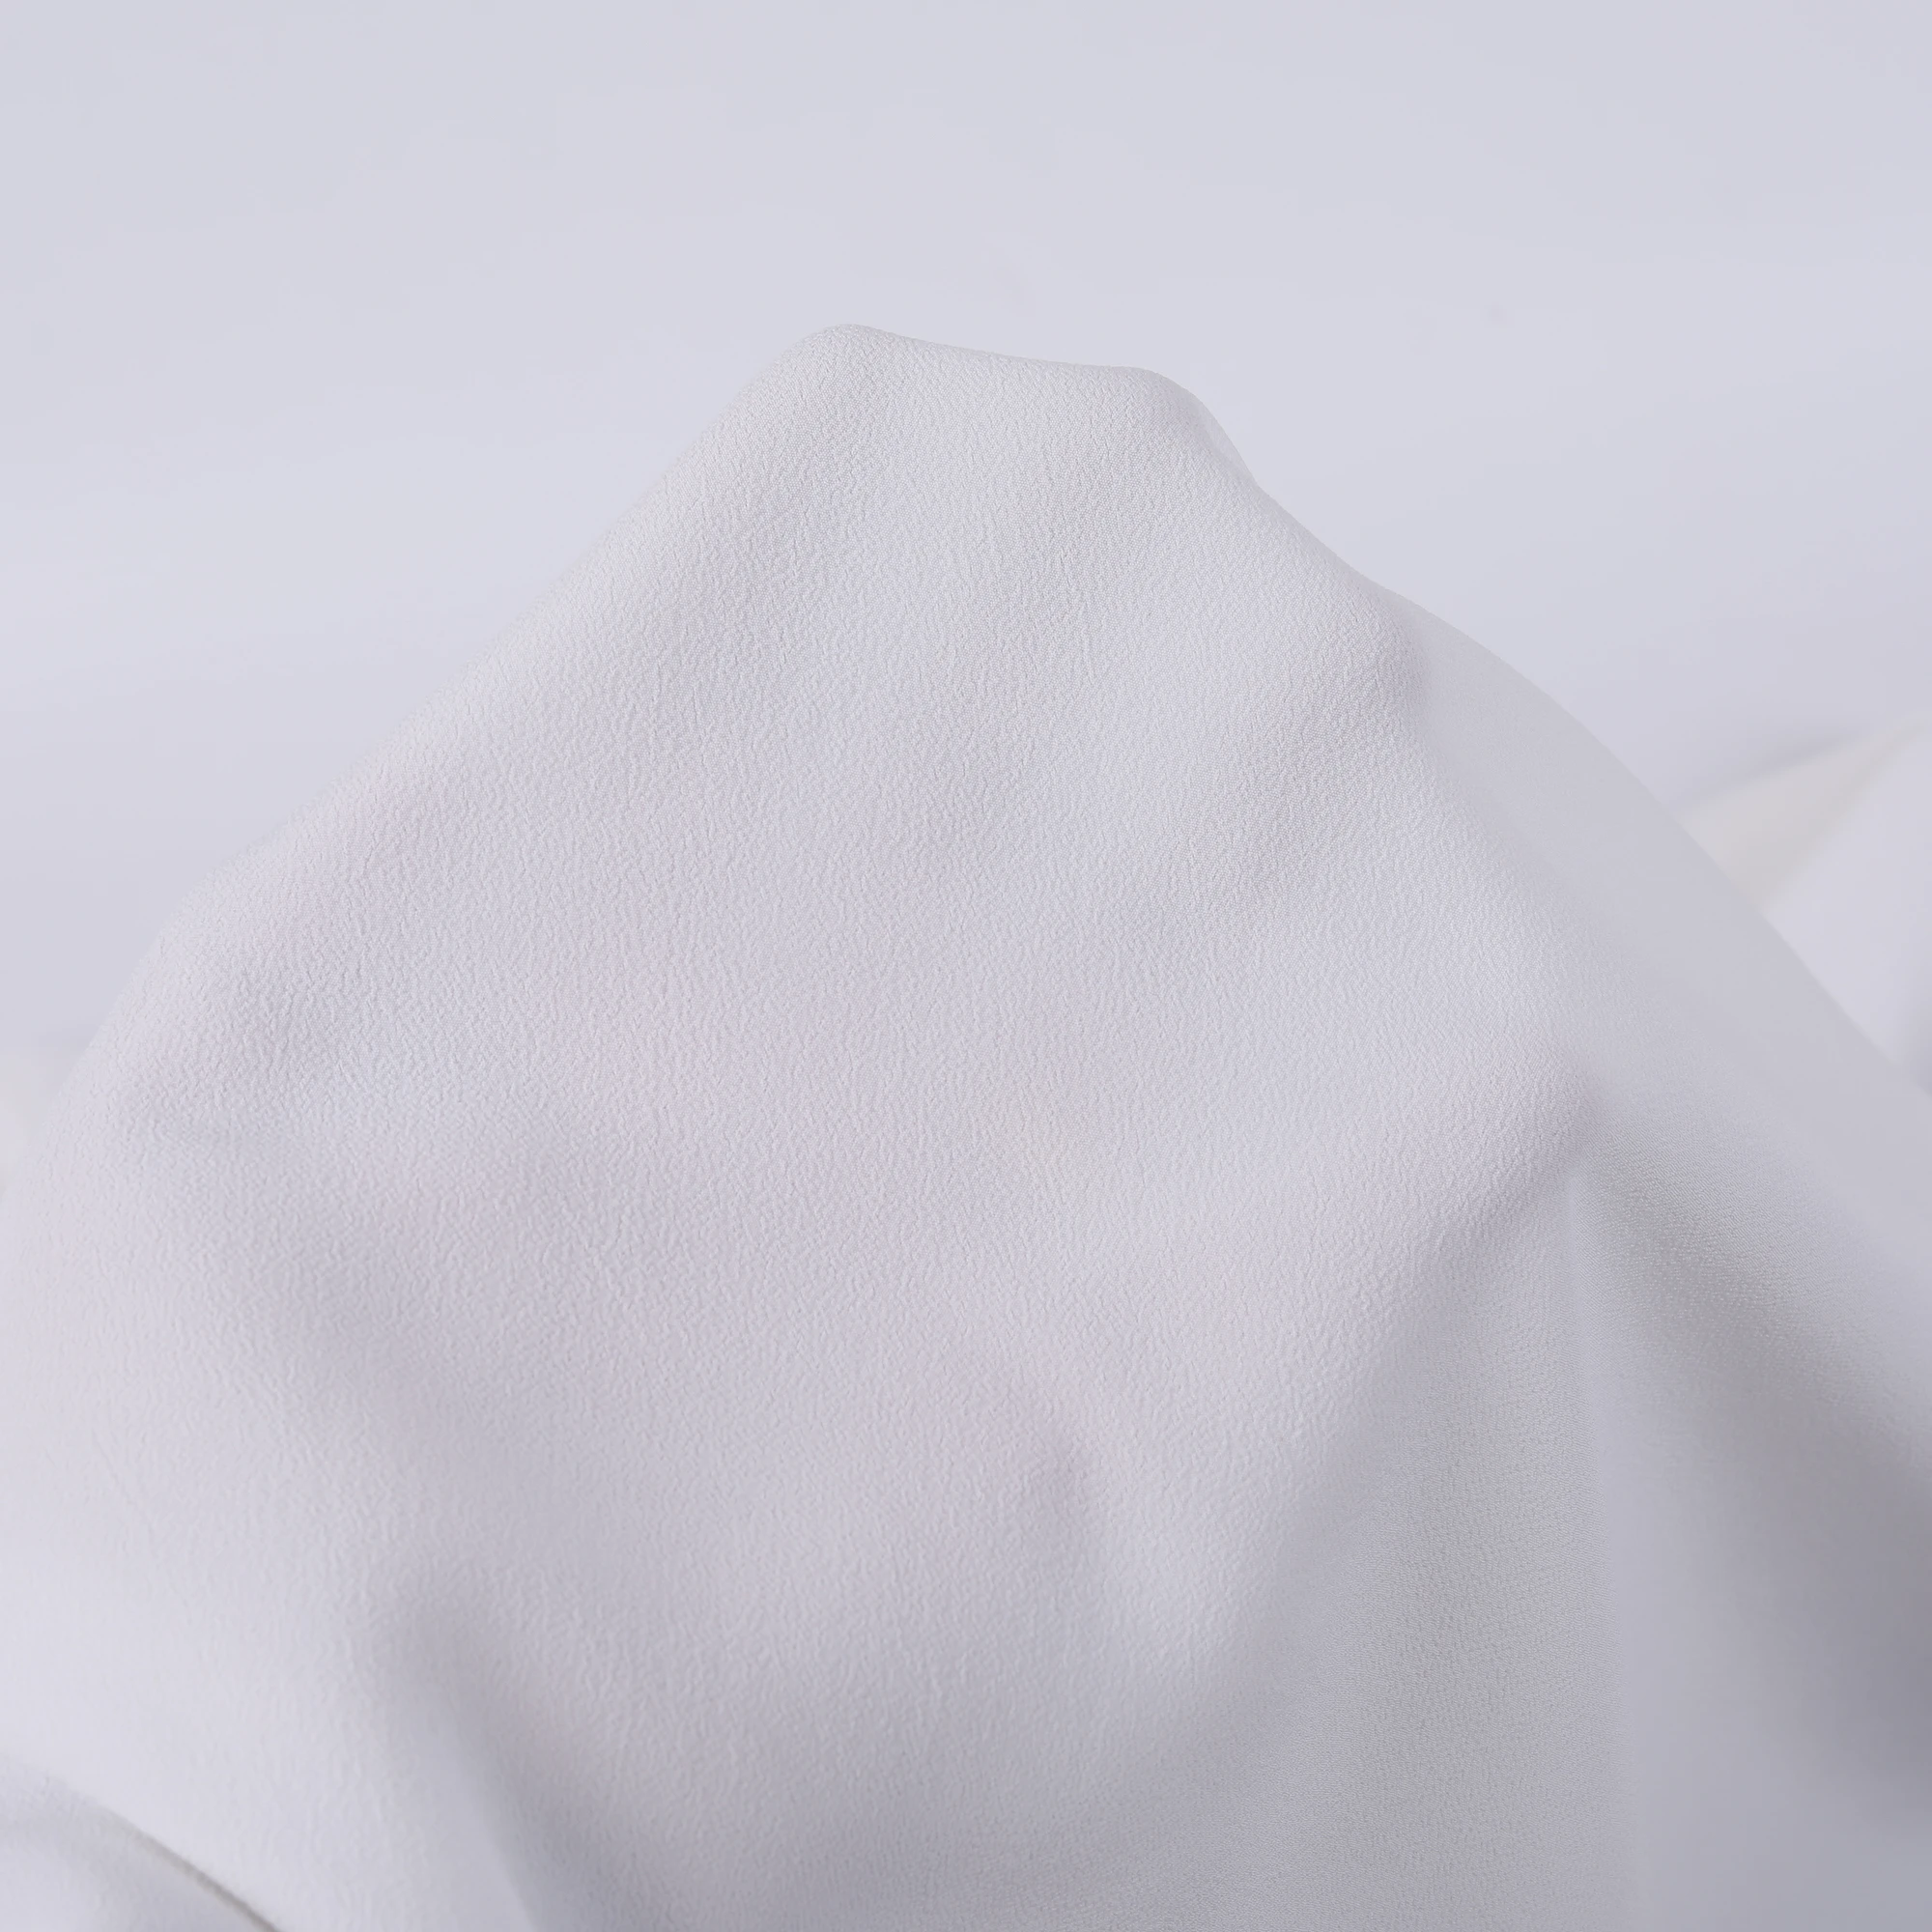 Shirt Woven Fabric 100 Viscose 145gsm Price Per Meter Dress Plain Custom Print